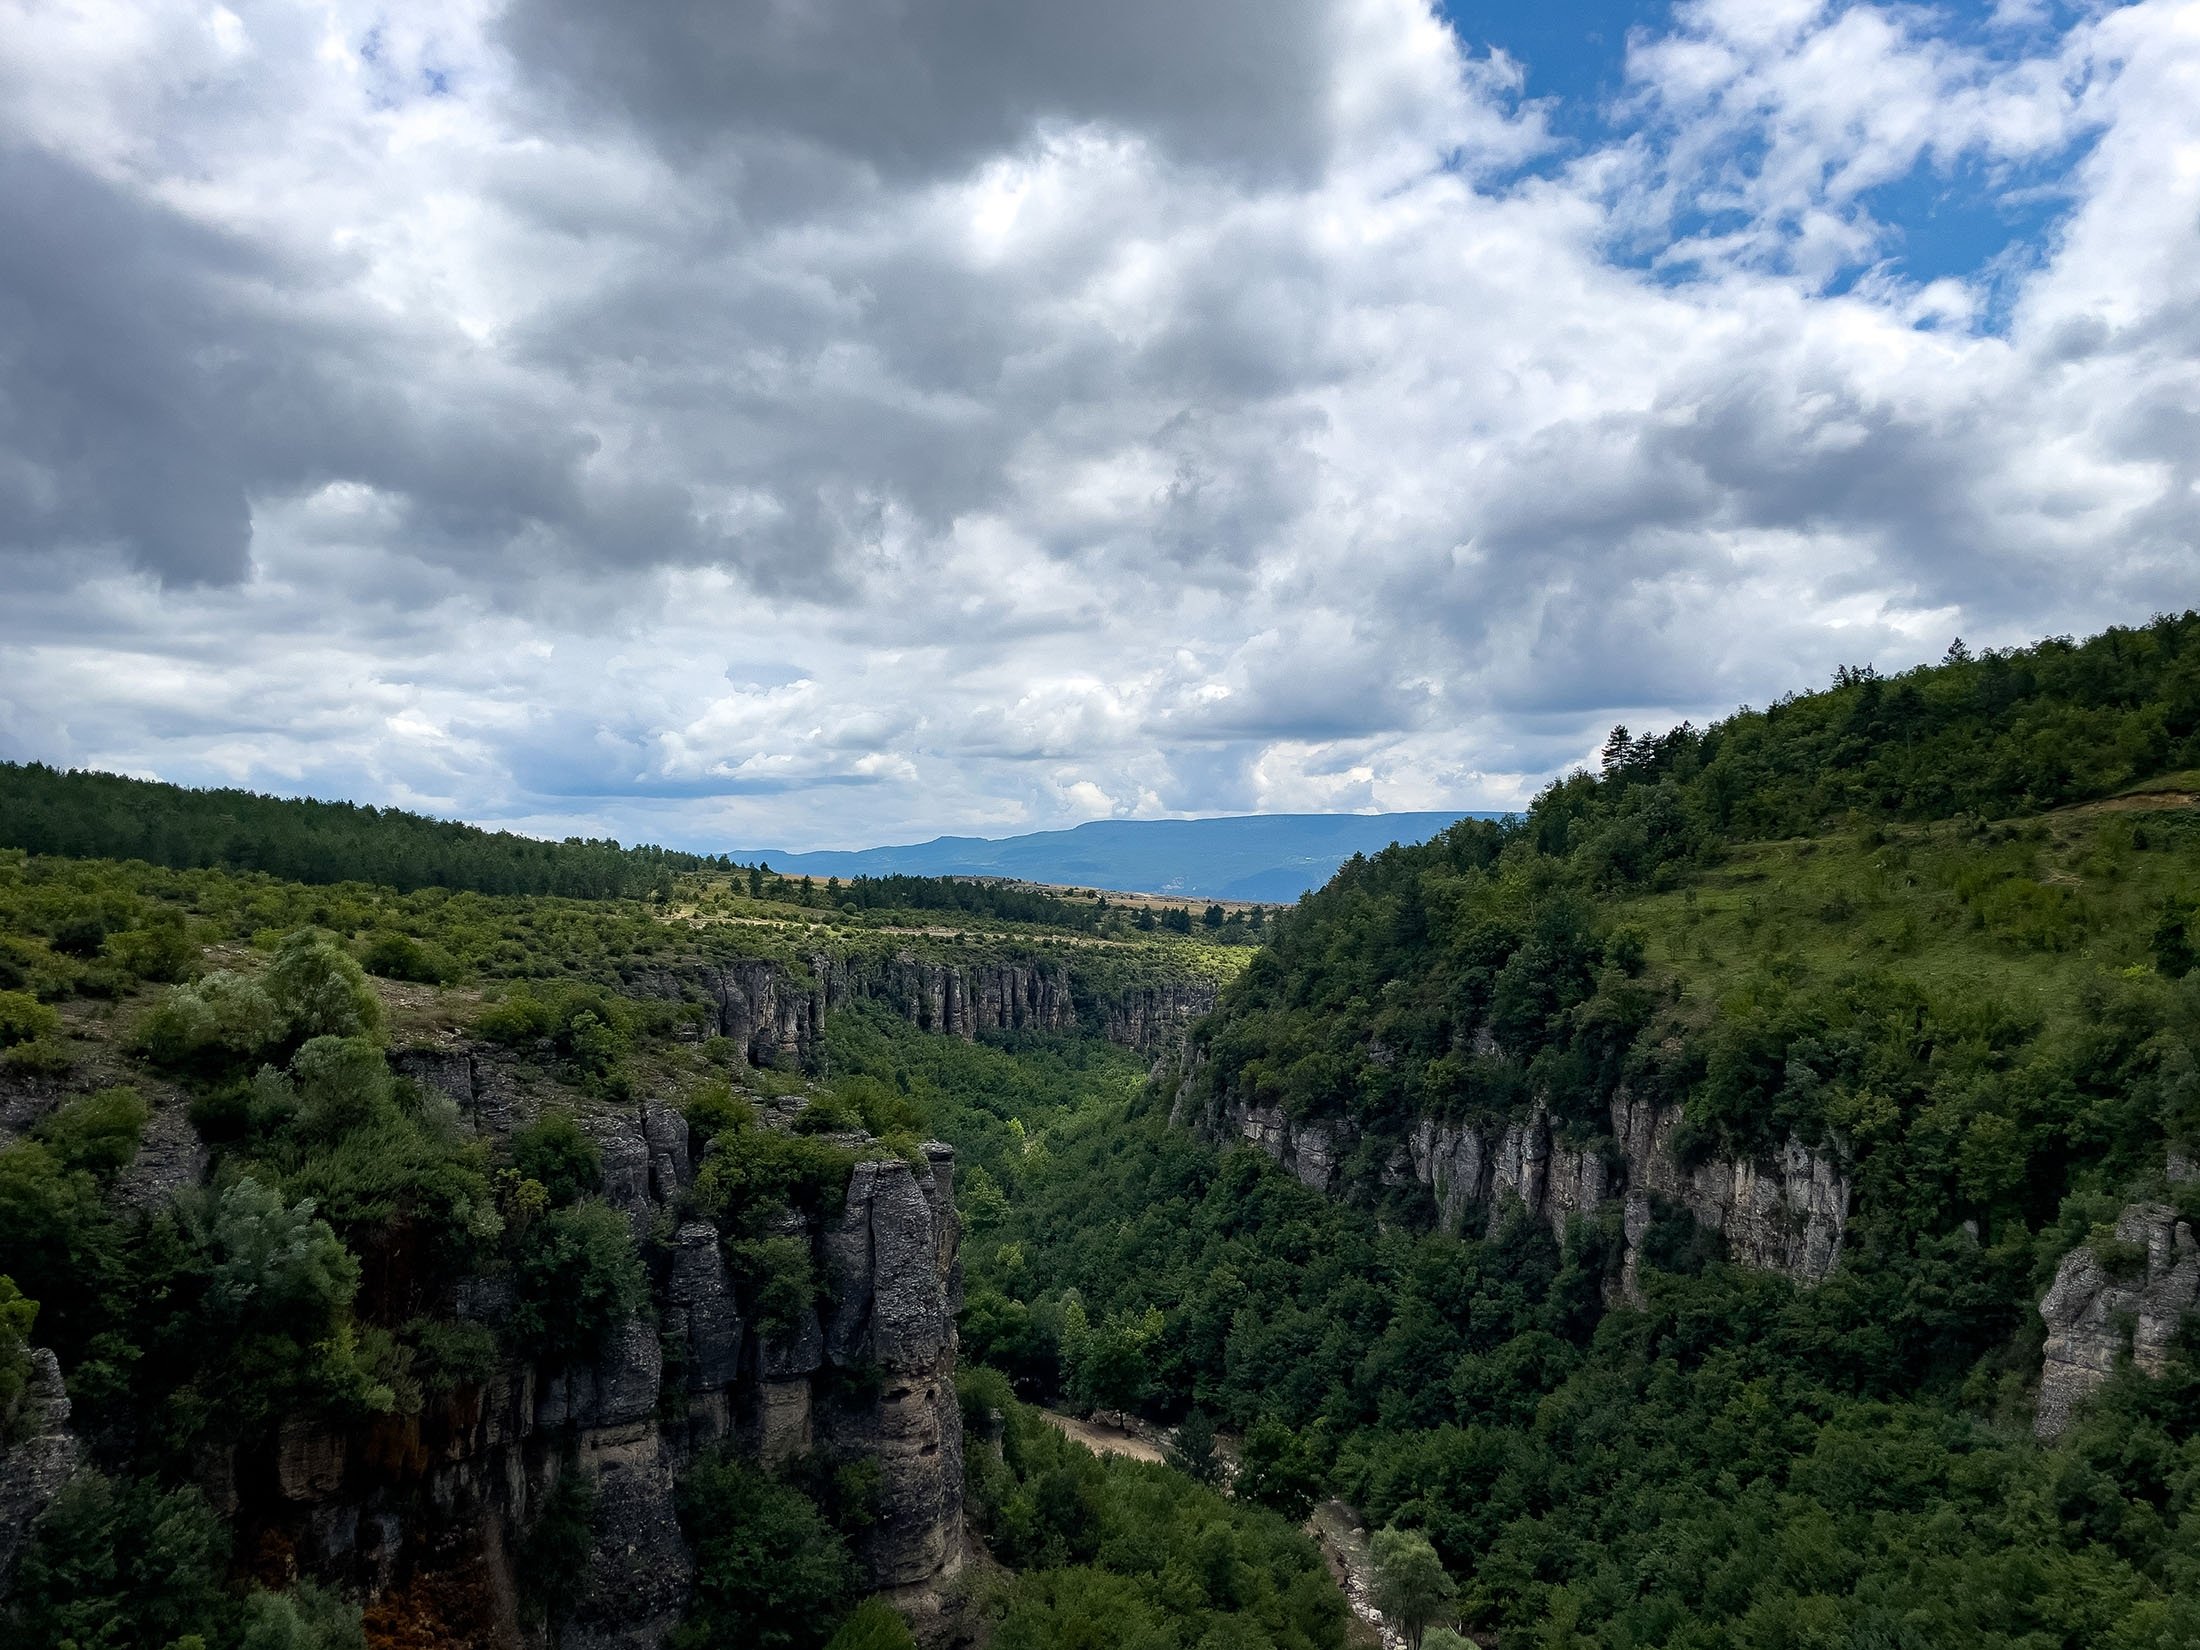 The canyons of Safranbolu, Karabük, northern Turkey, July 10, 2022. (Photo by Ahmet Koçak)